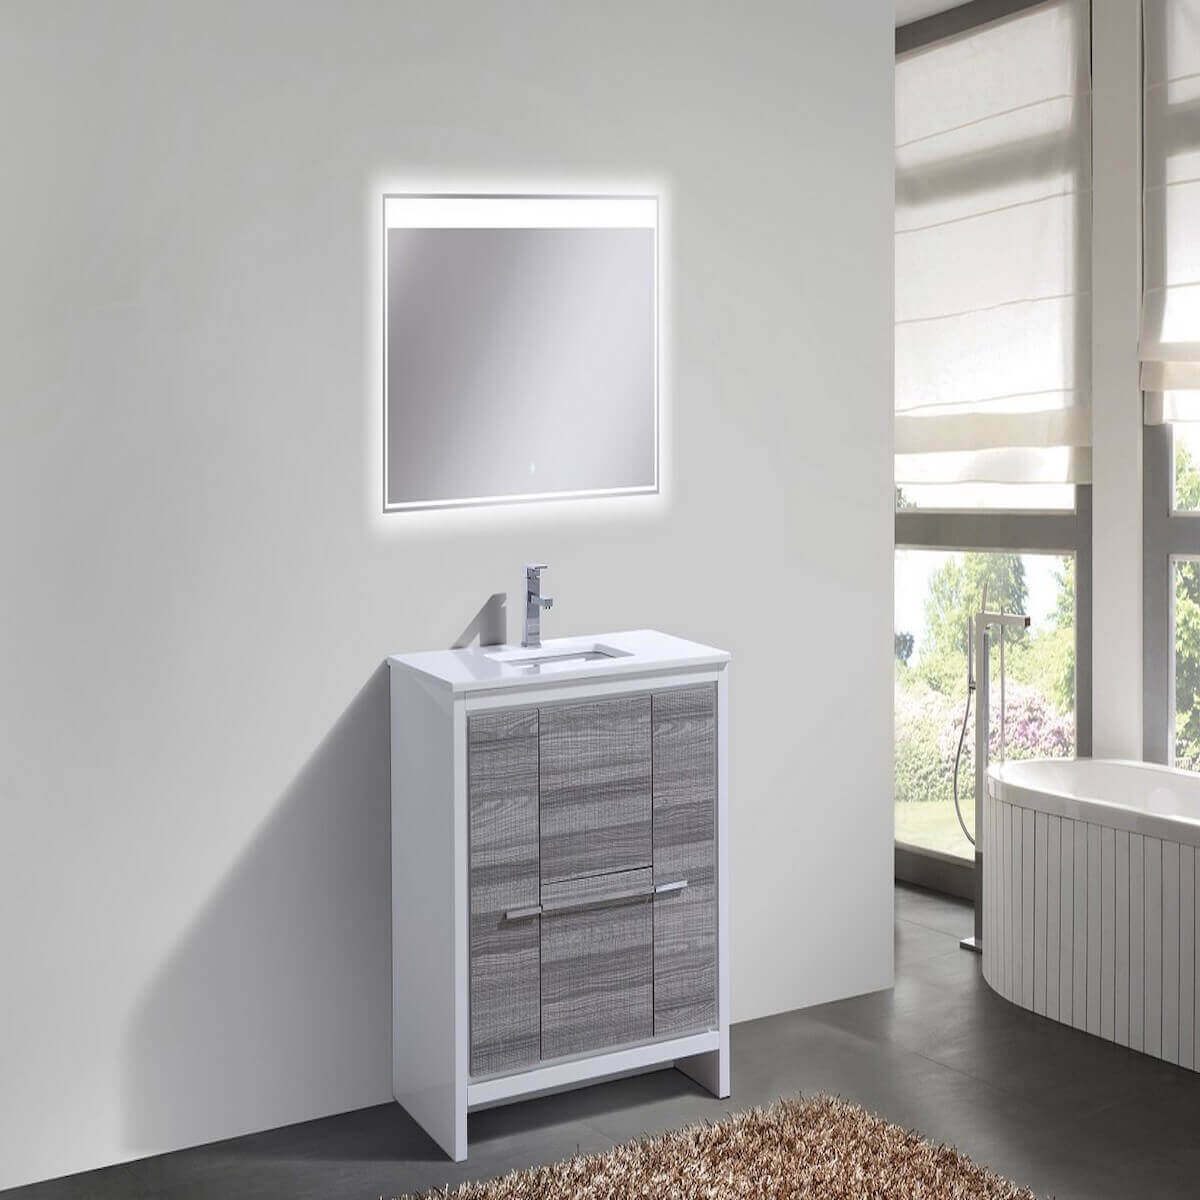 KubeBath Dolce 36" Ash Gray Freestanding Single Vanity with Quartz Countertop AD636HG in Bathroom #finish_ash gray